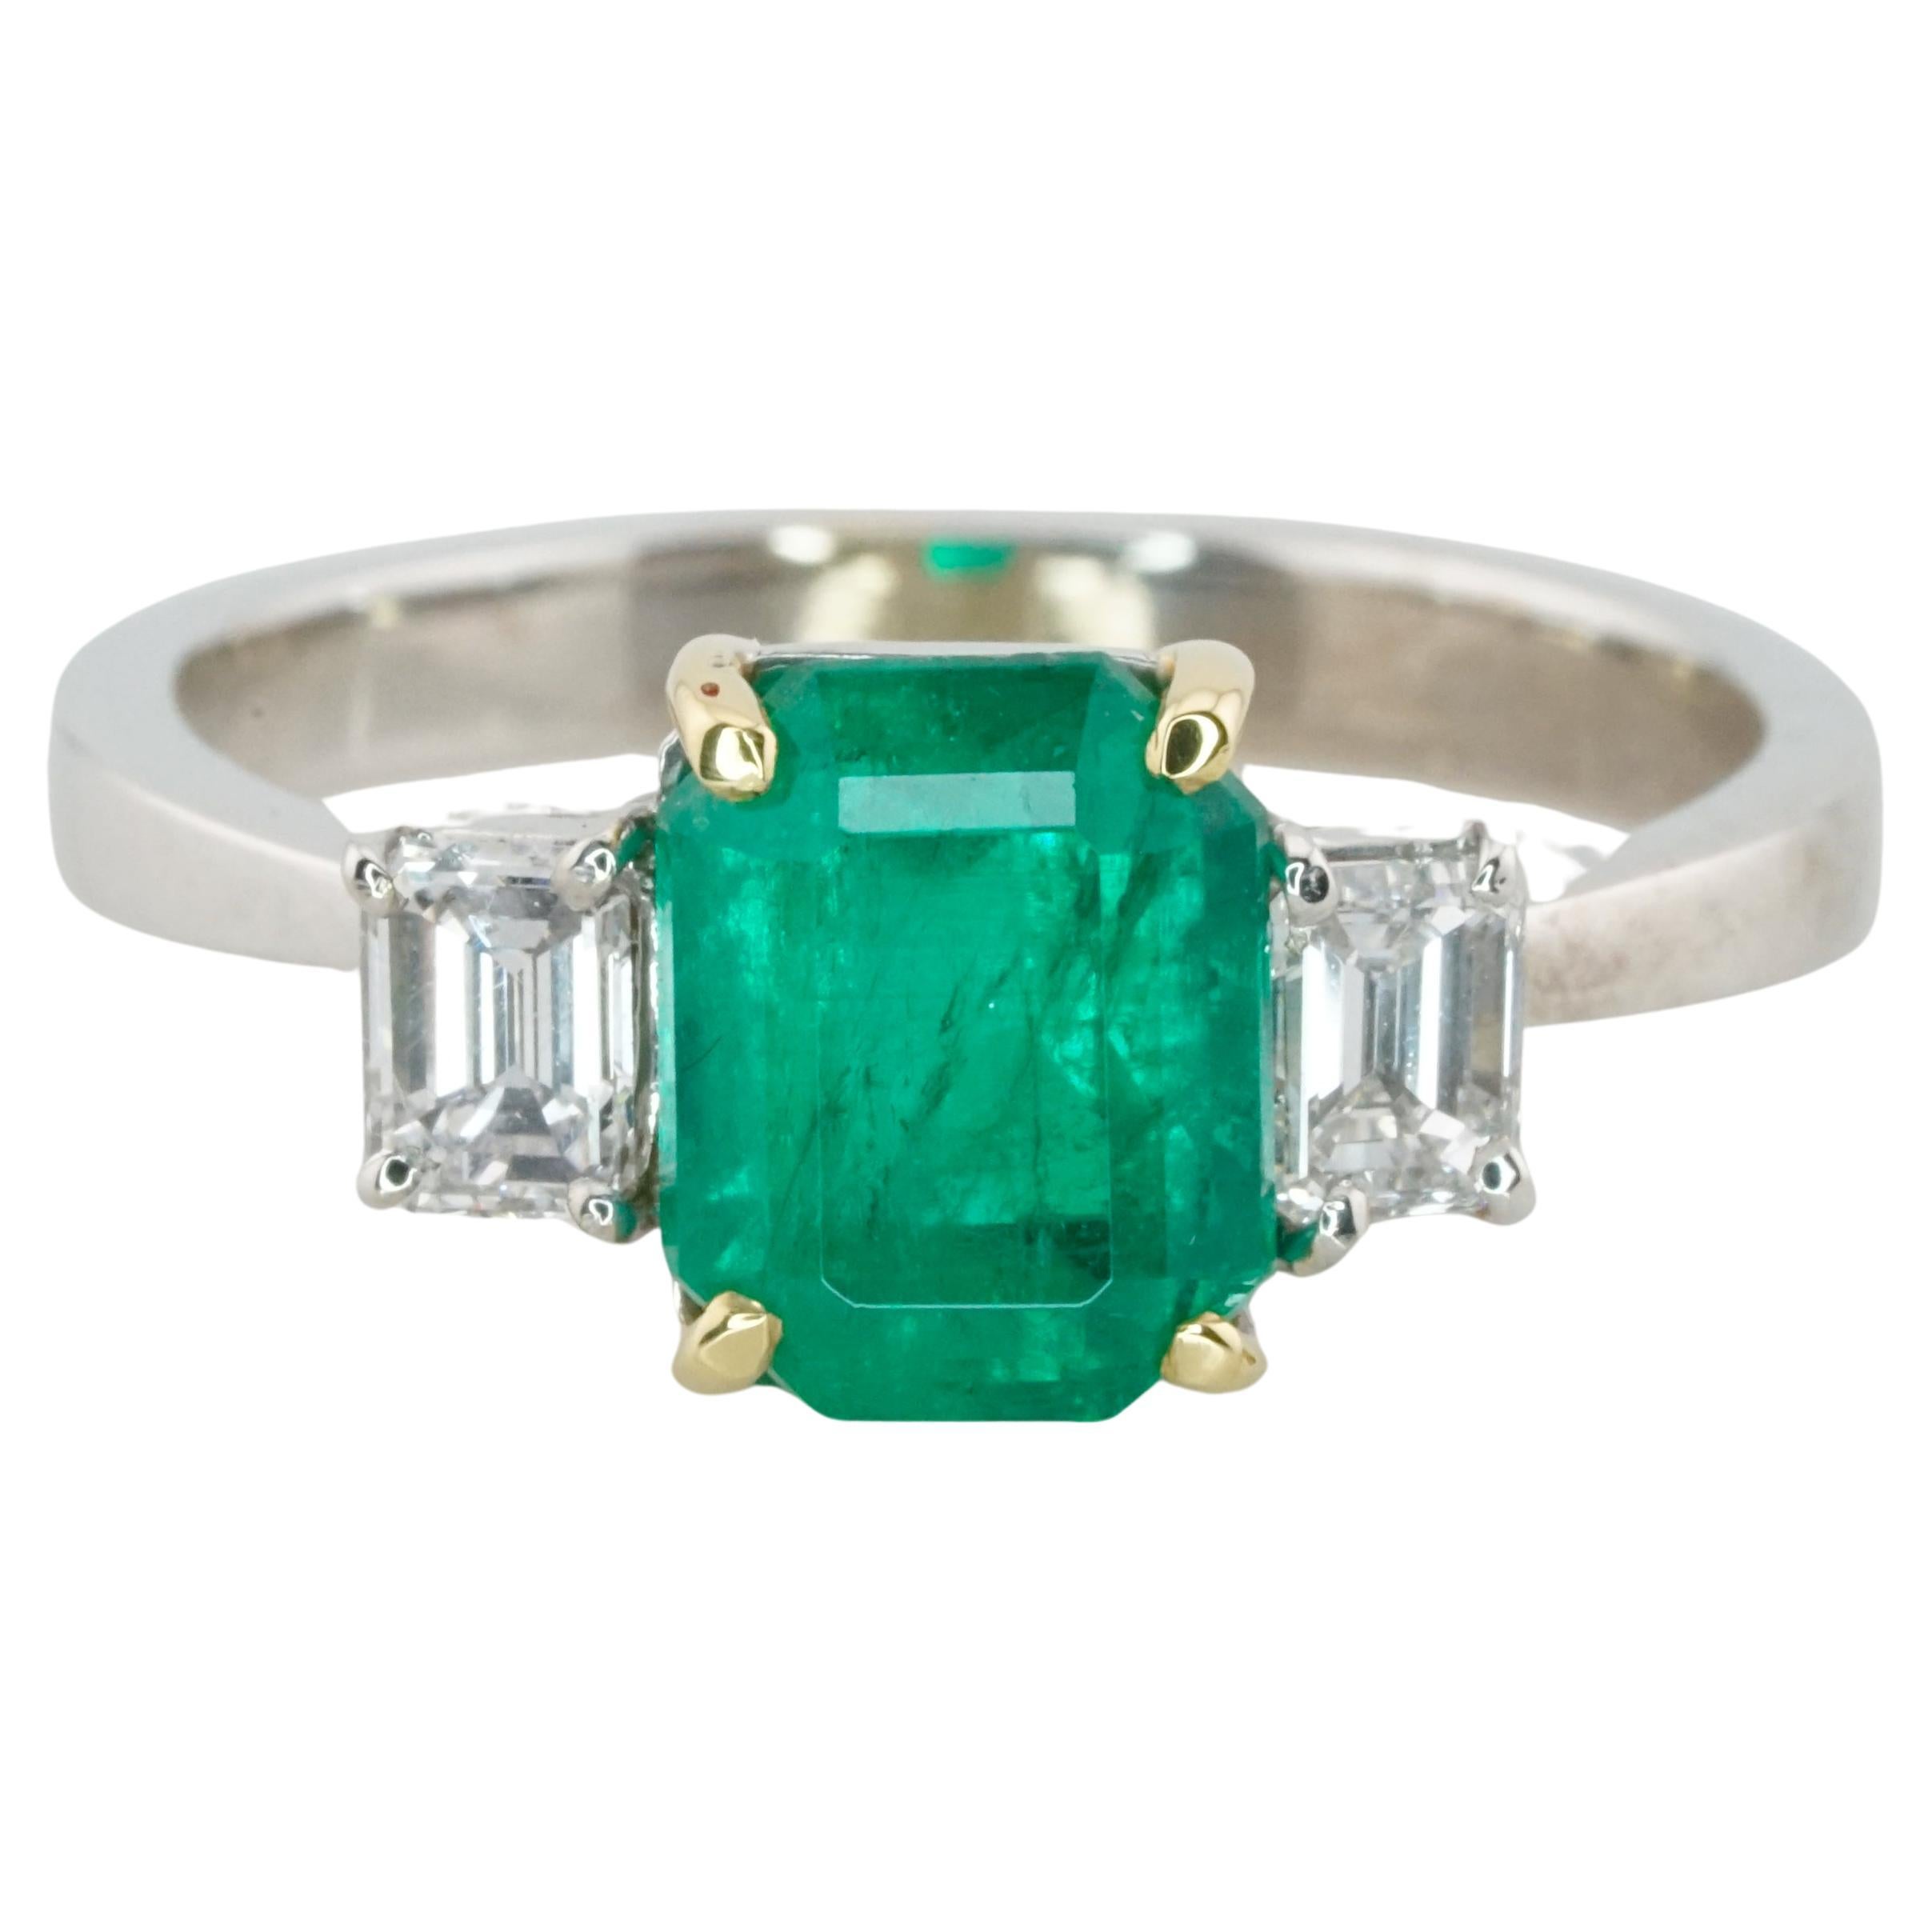 AIGS Certified 2.12 Carat Vivid Green Colombian Emerald 18K White Gold Ring (bague en or blanc 18K) en vente